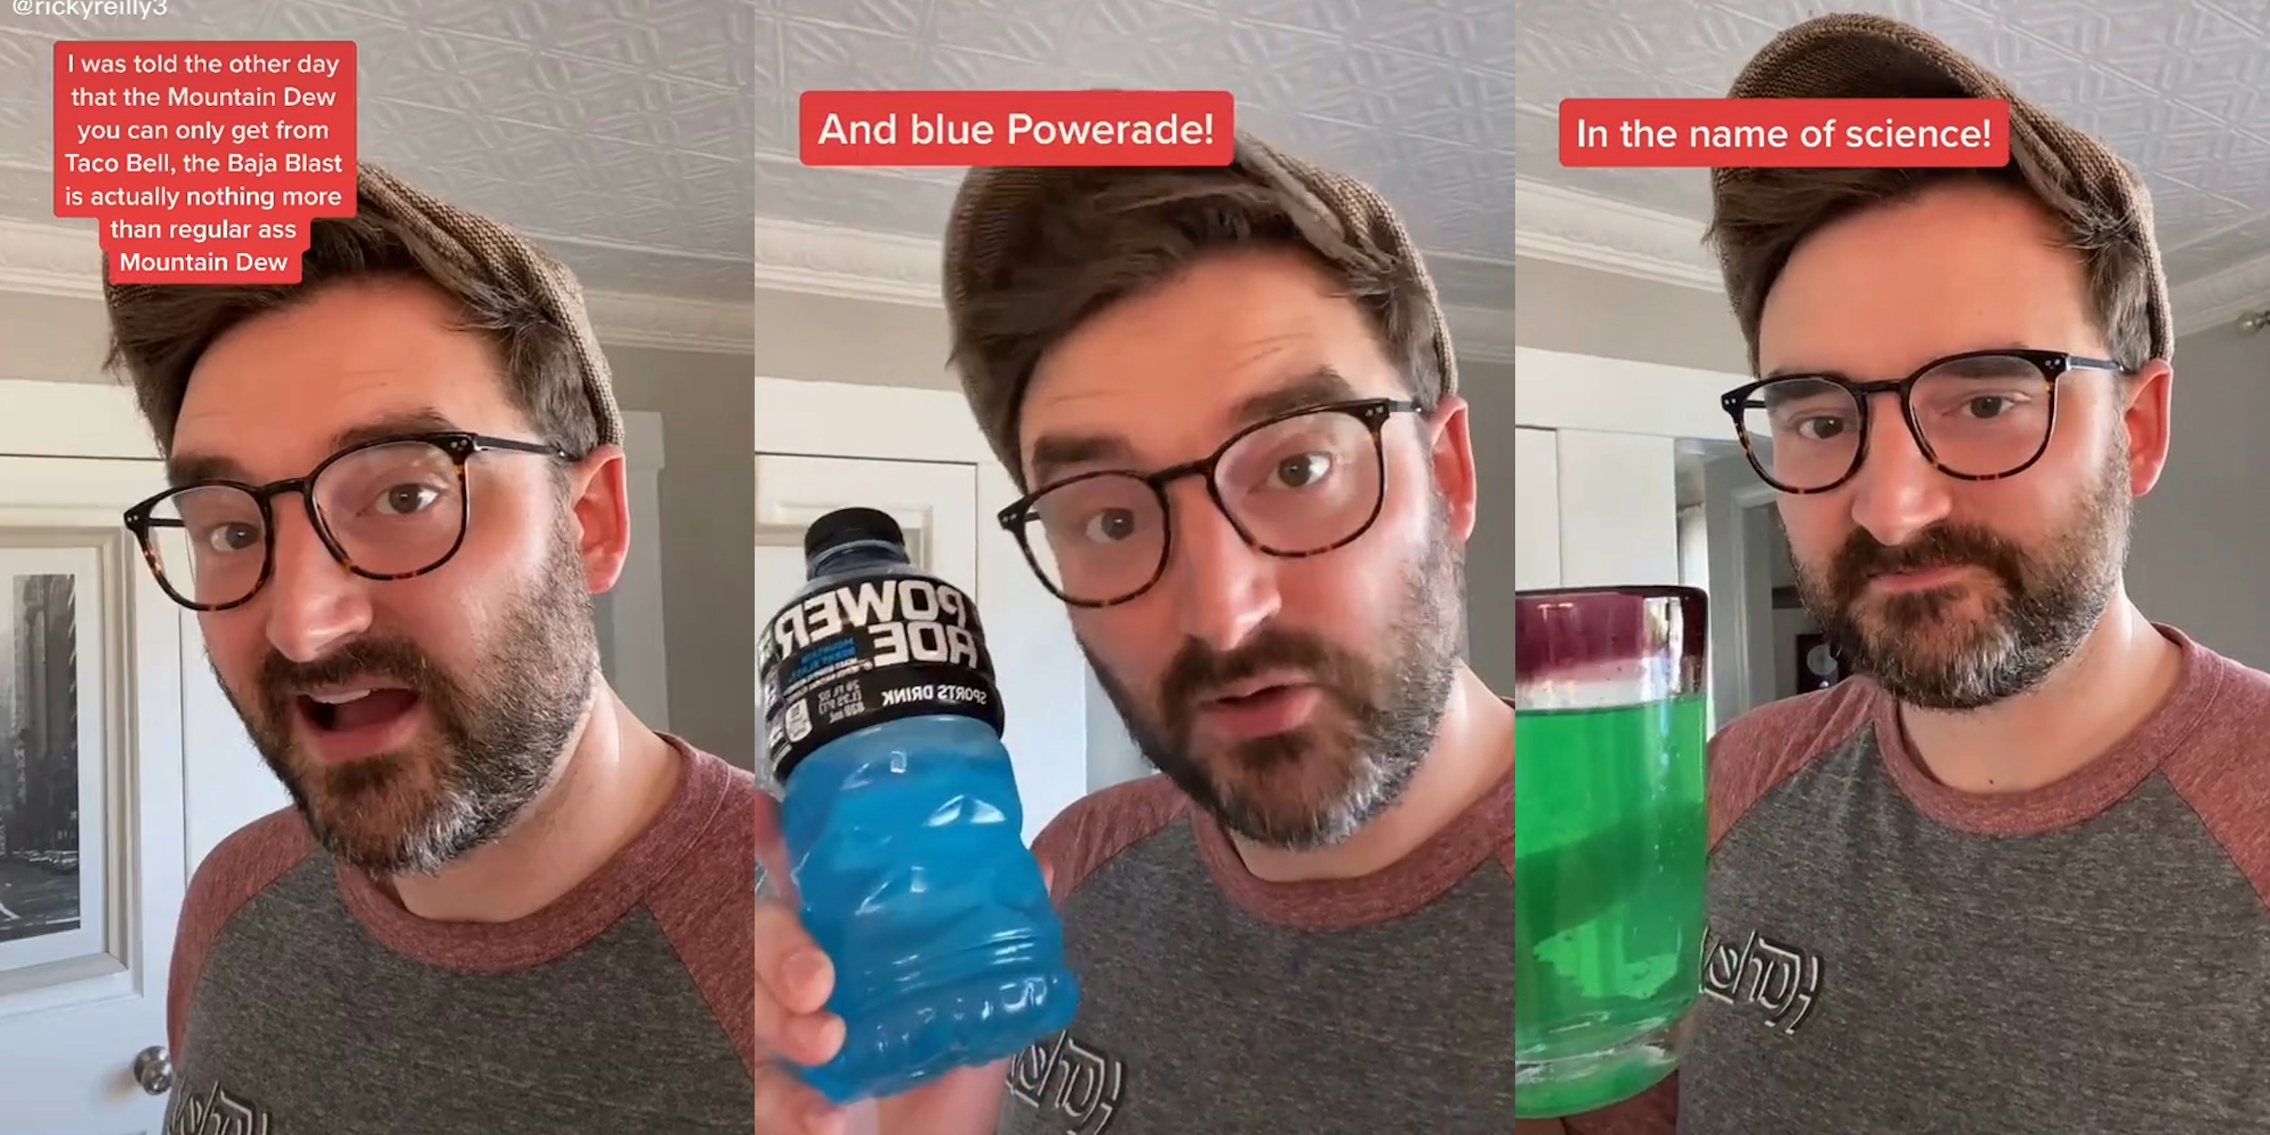 man mixing mountain dew with blue powerade